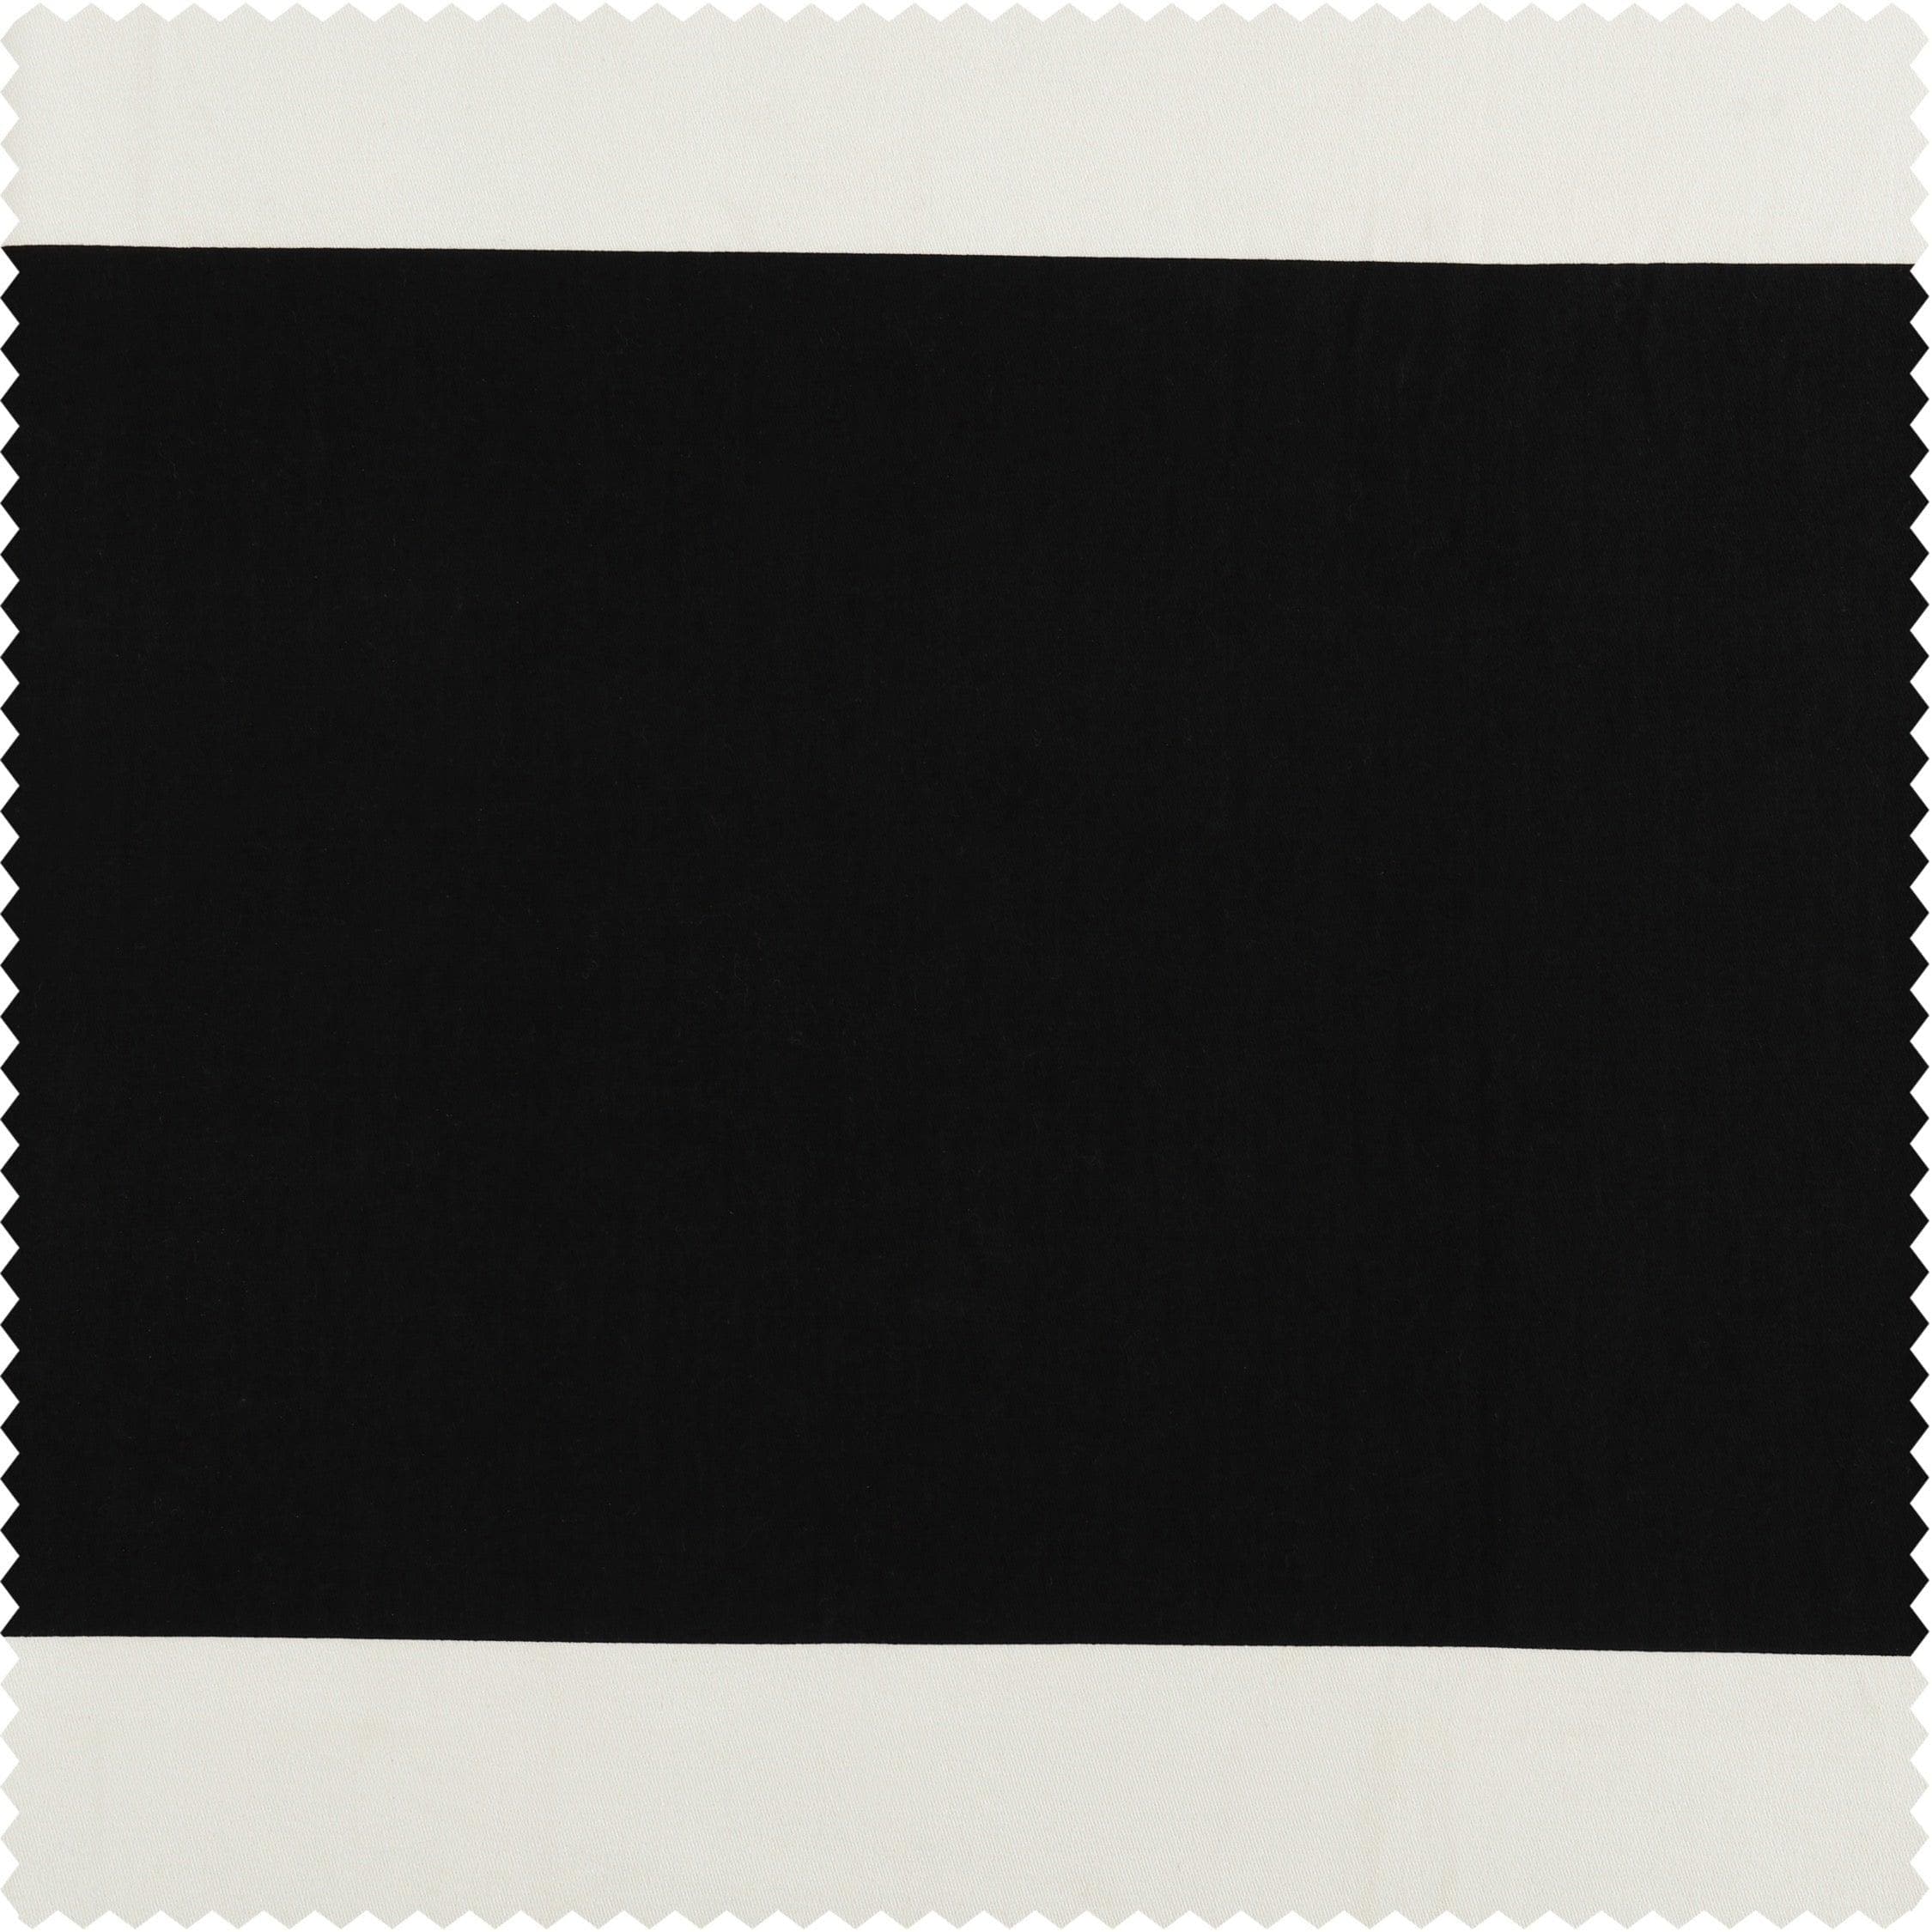 Onyx Black & Off White Horizontal Striped Grommet Printed Cotton Room Darkening Curtain